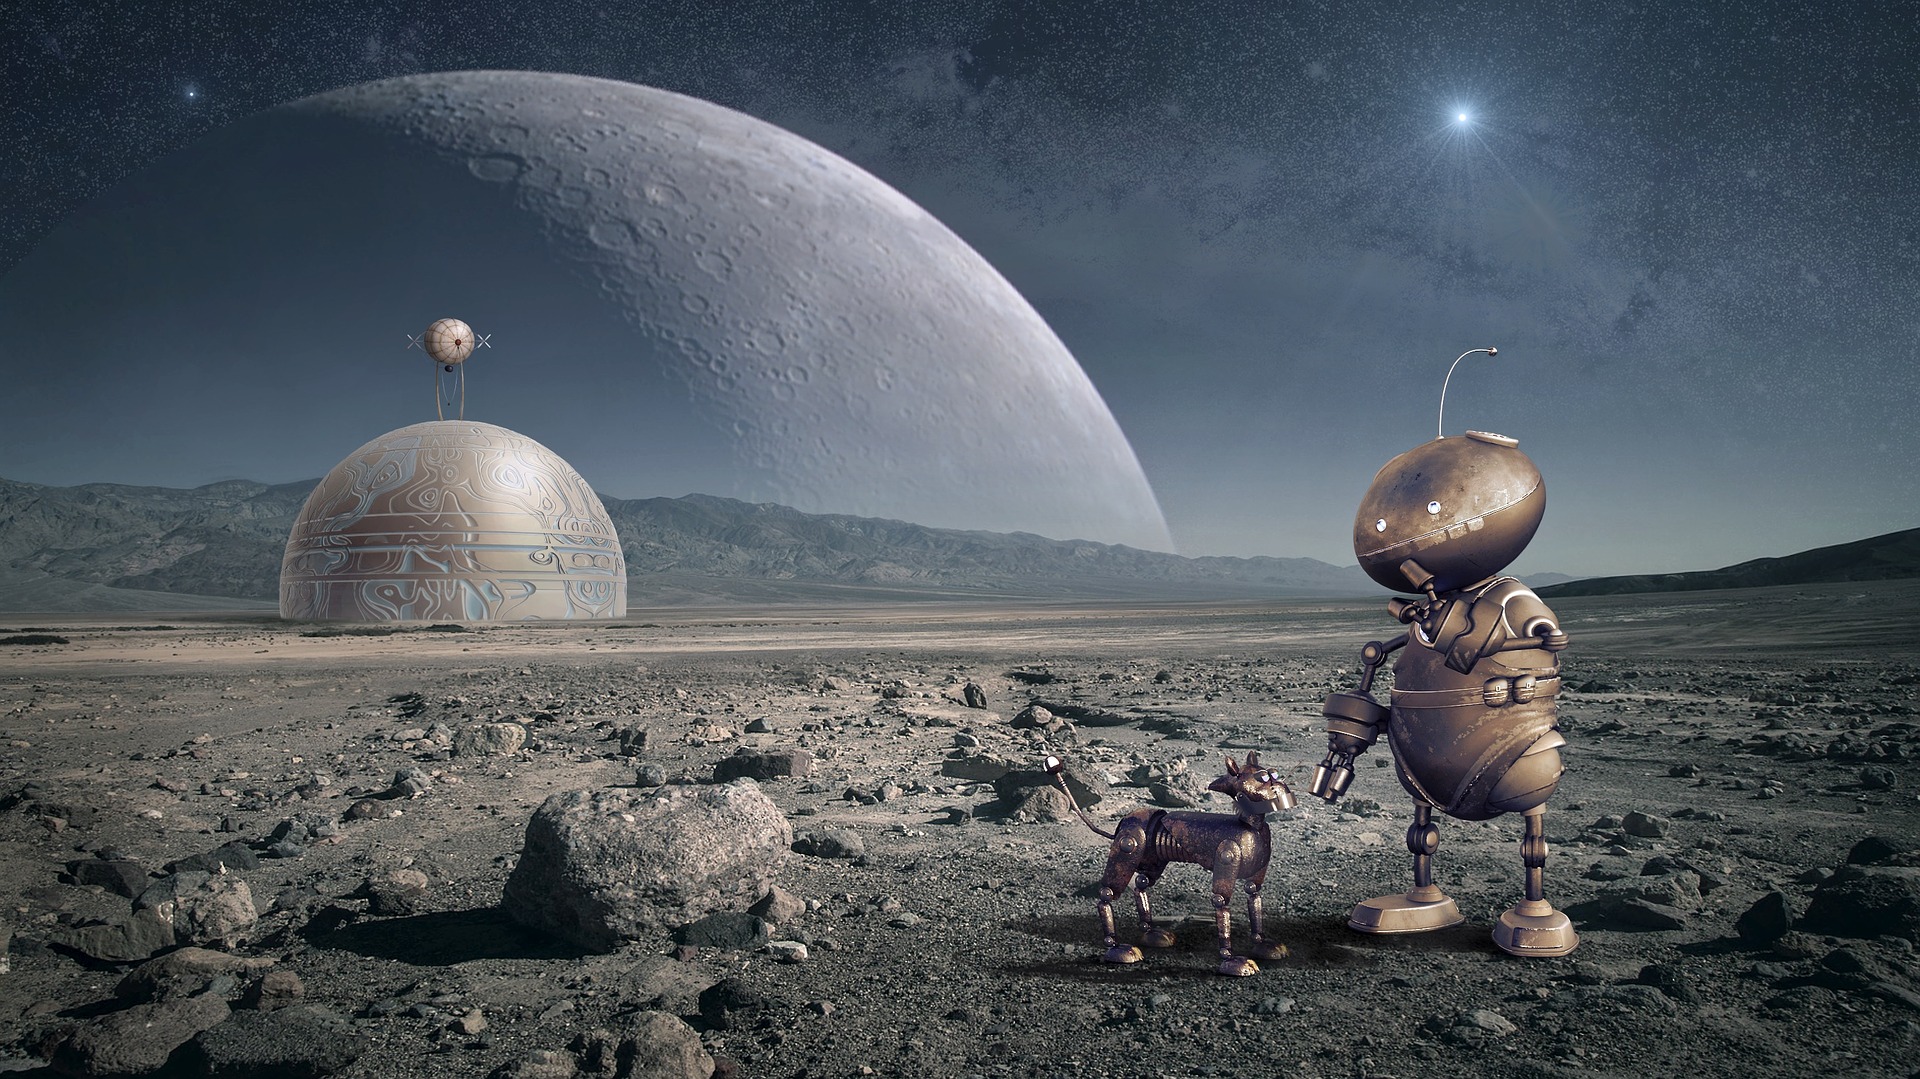 A cute robot and robot dog explore lunar terrain